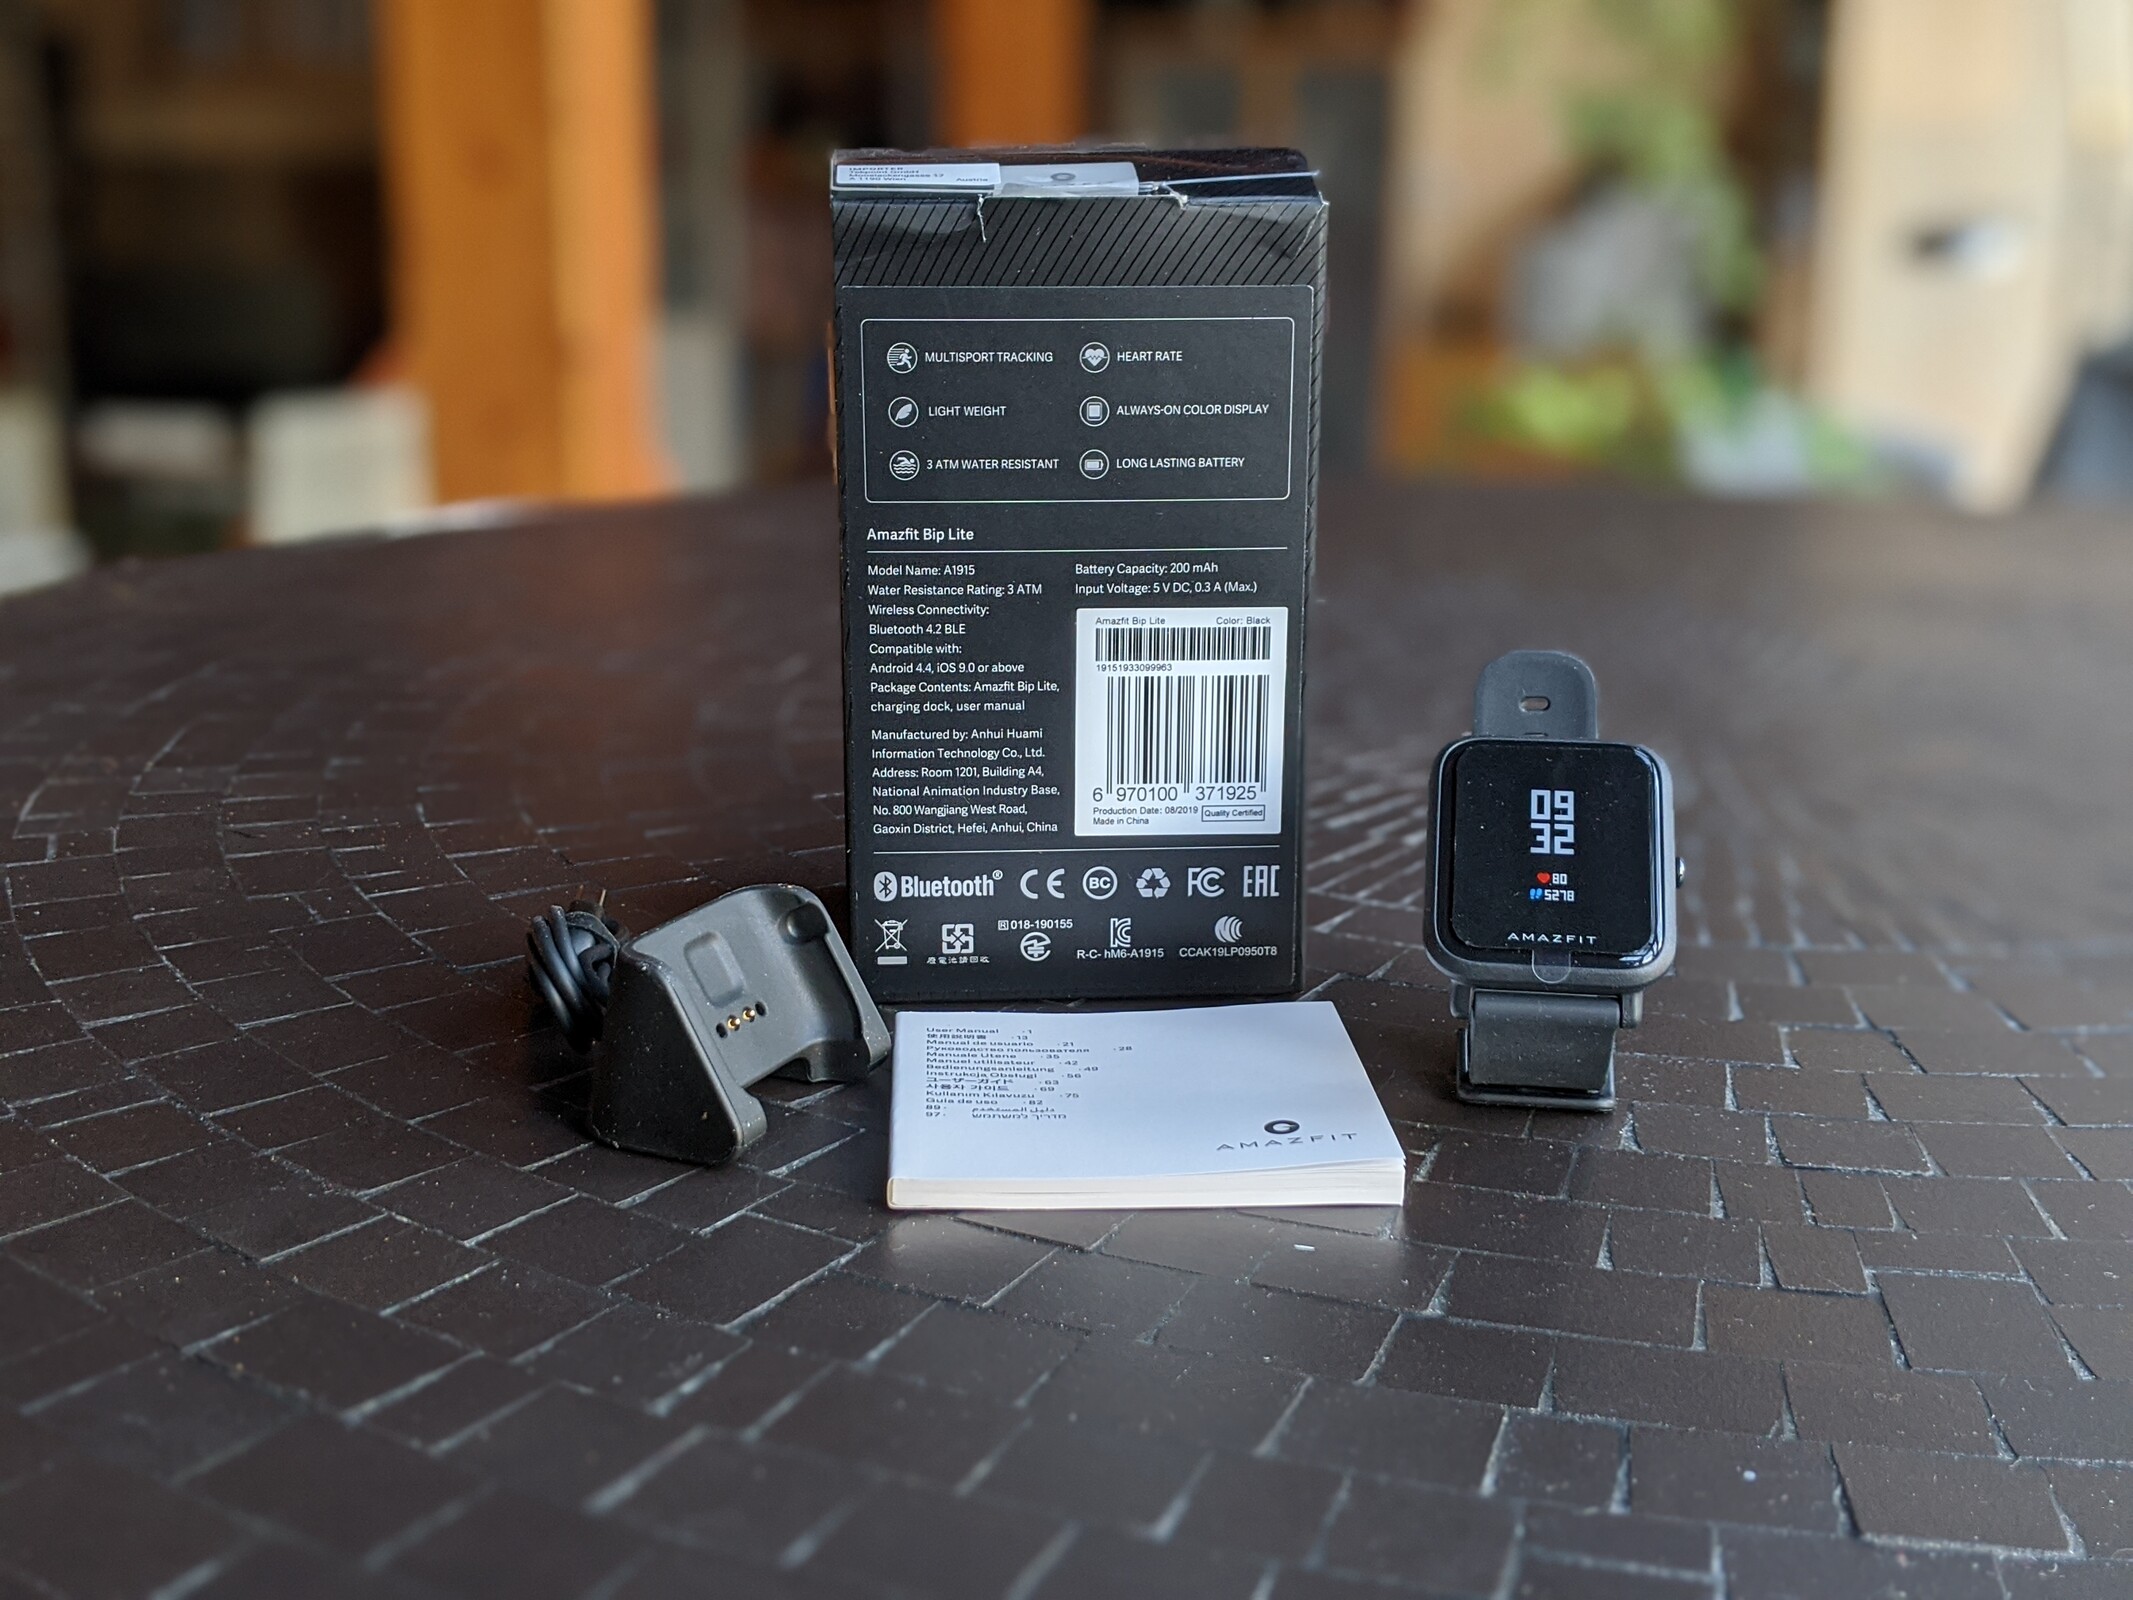 amazfit bip lite smartwatch features